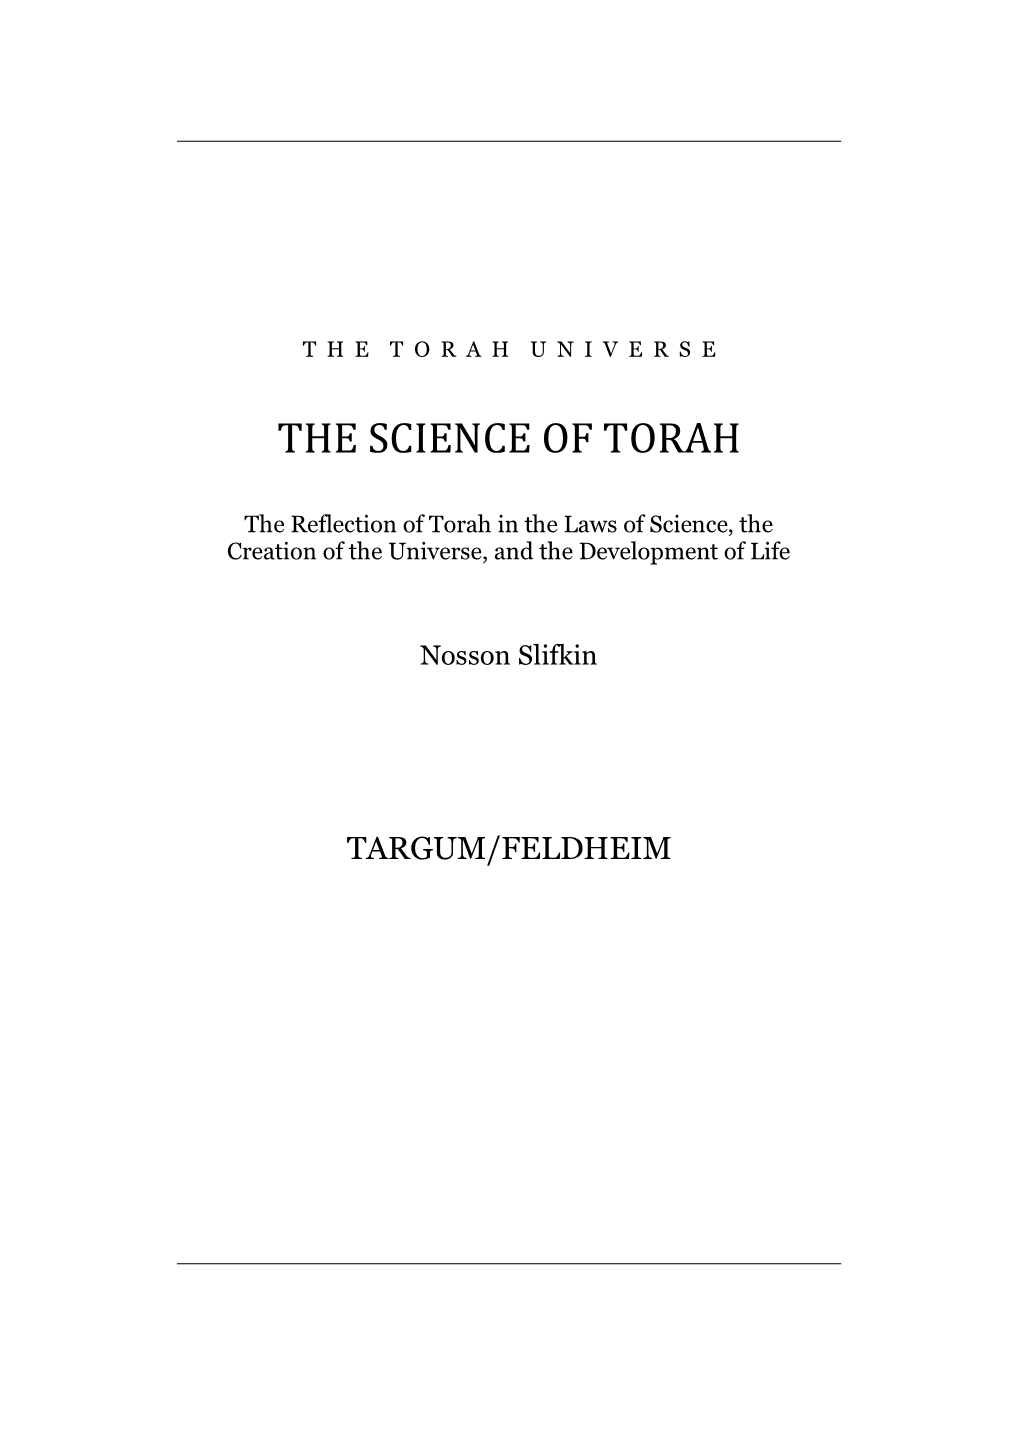 The Science of Torah